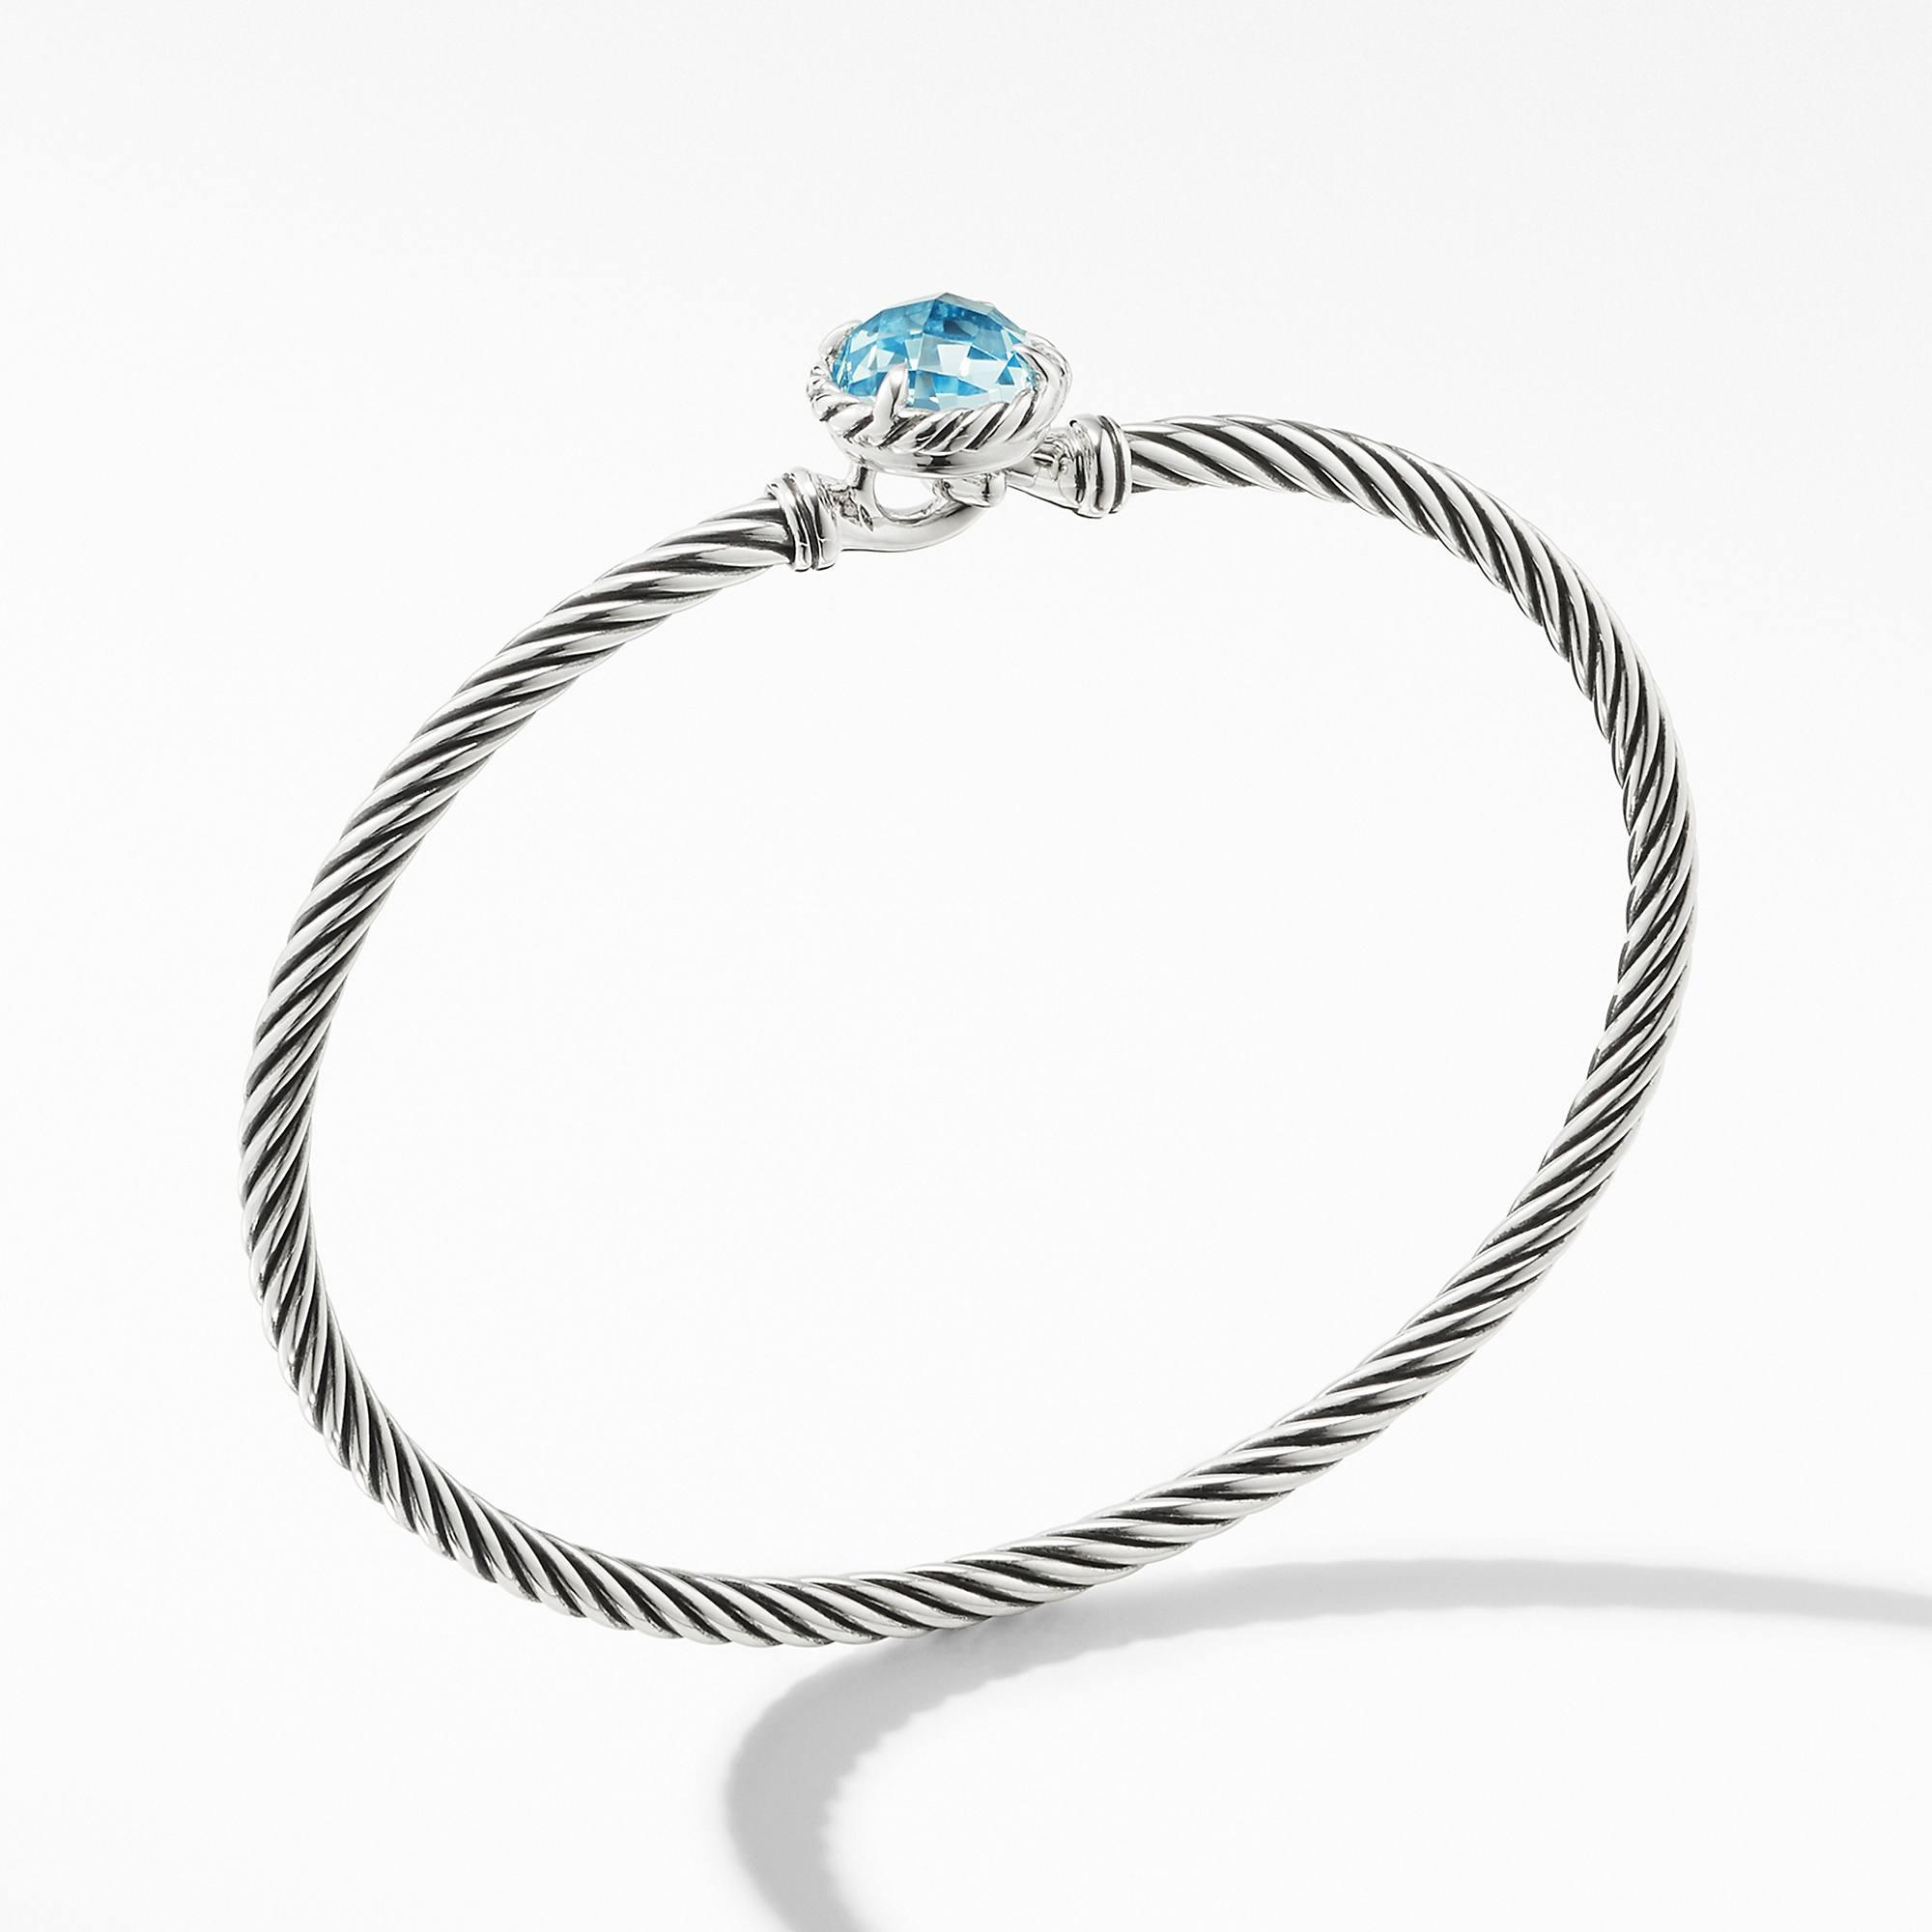 David Yurman Petite Chatelaine Bracelet with Blue Topaz Dome